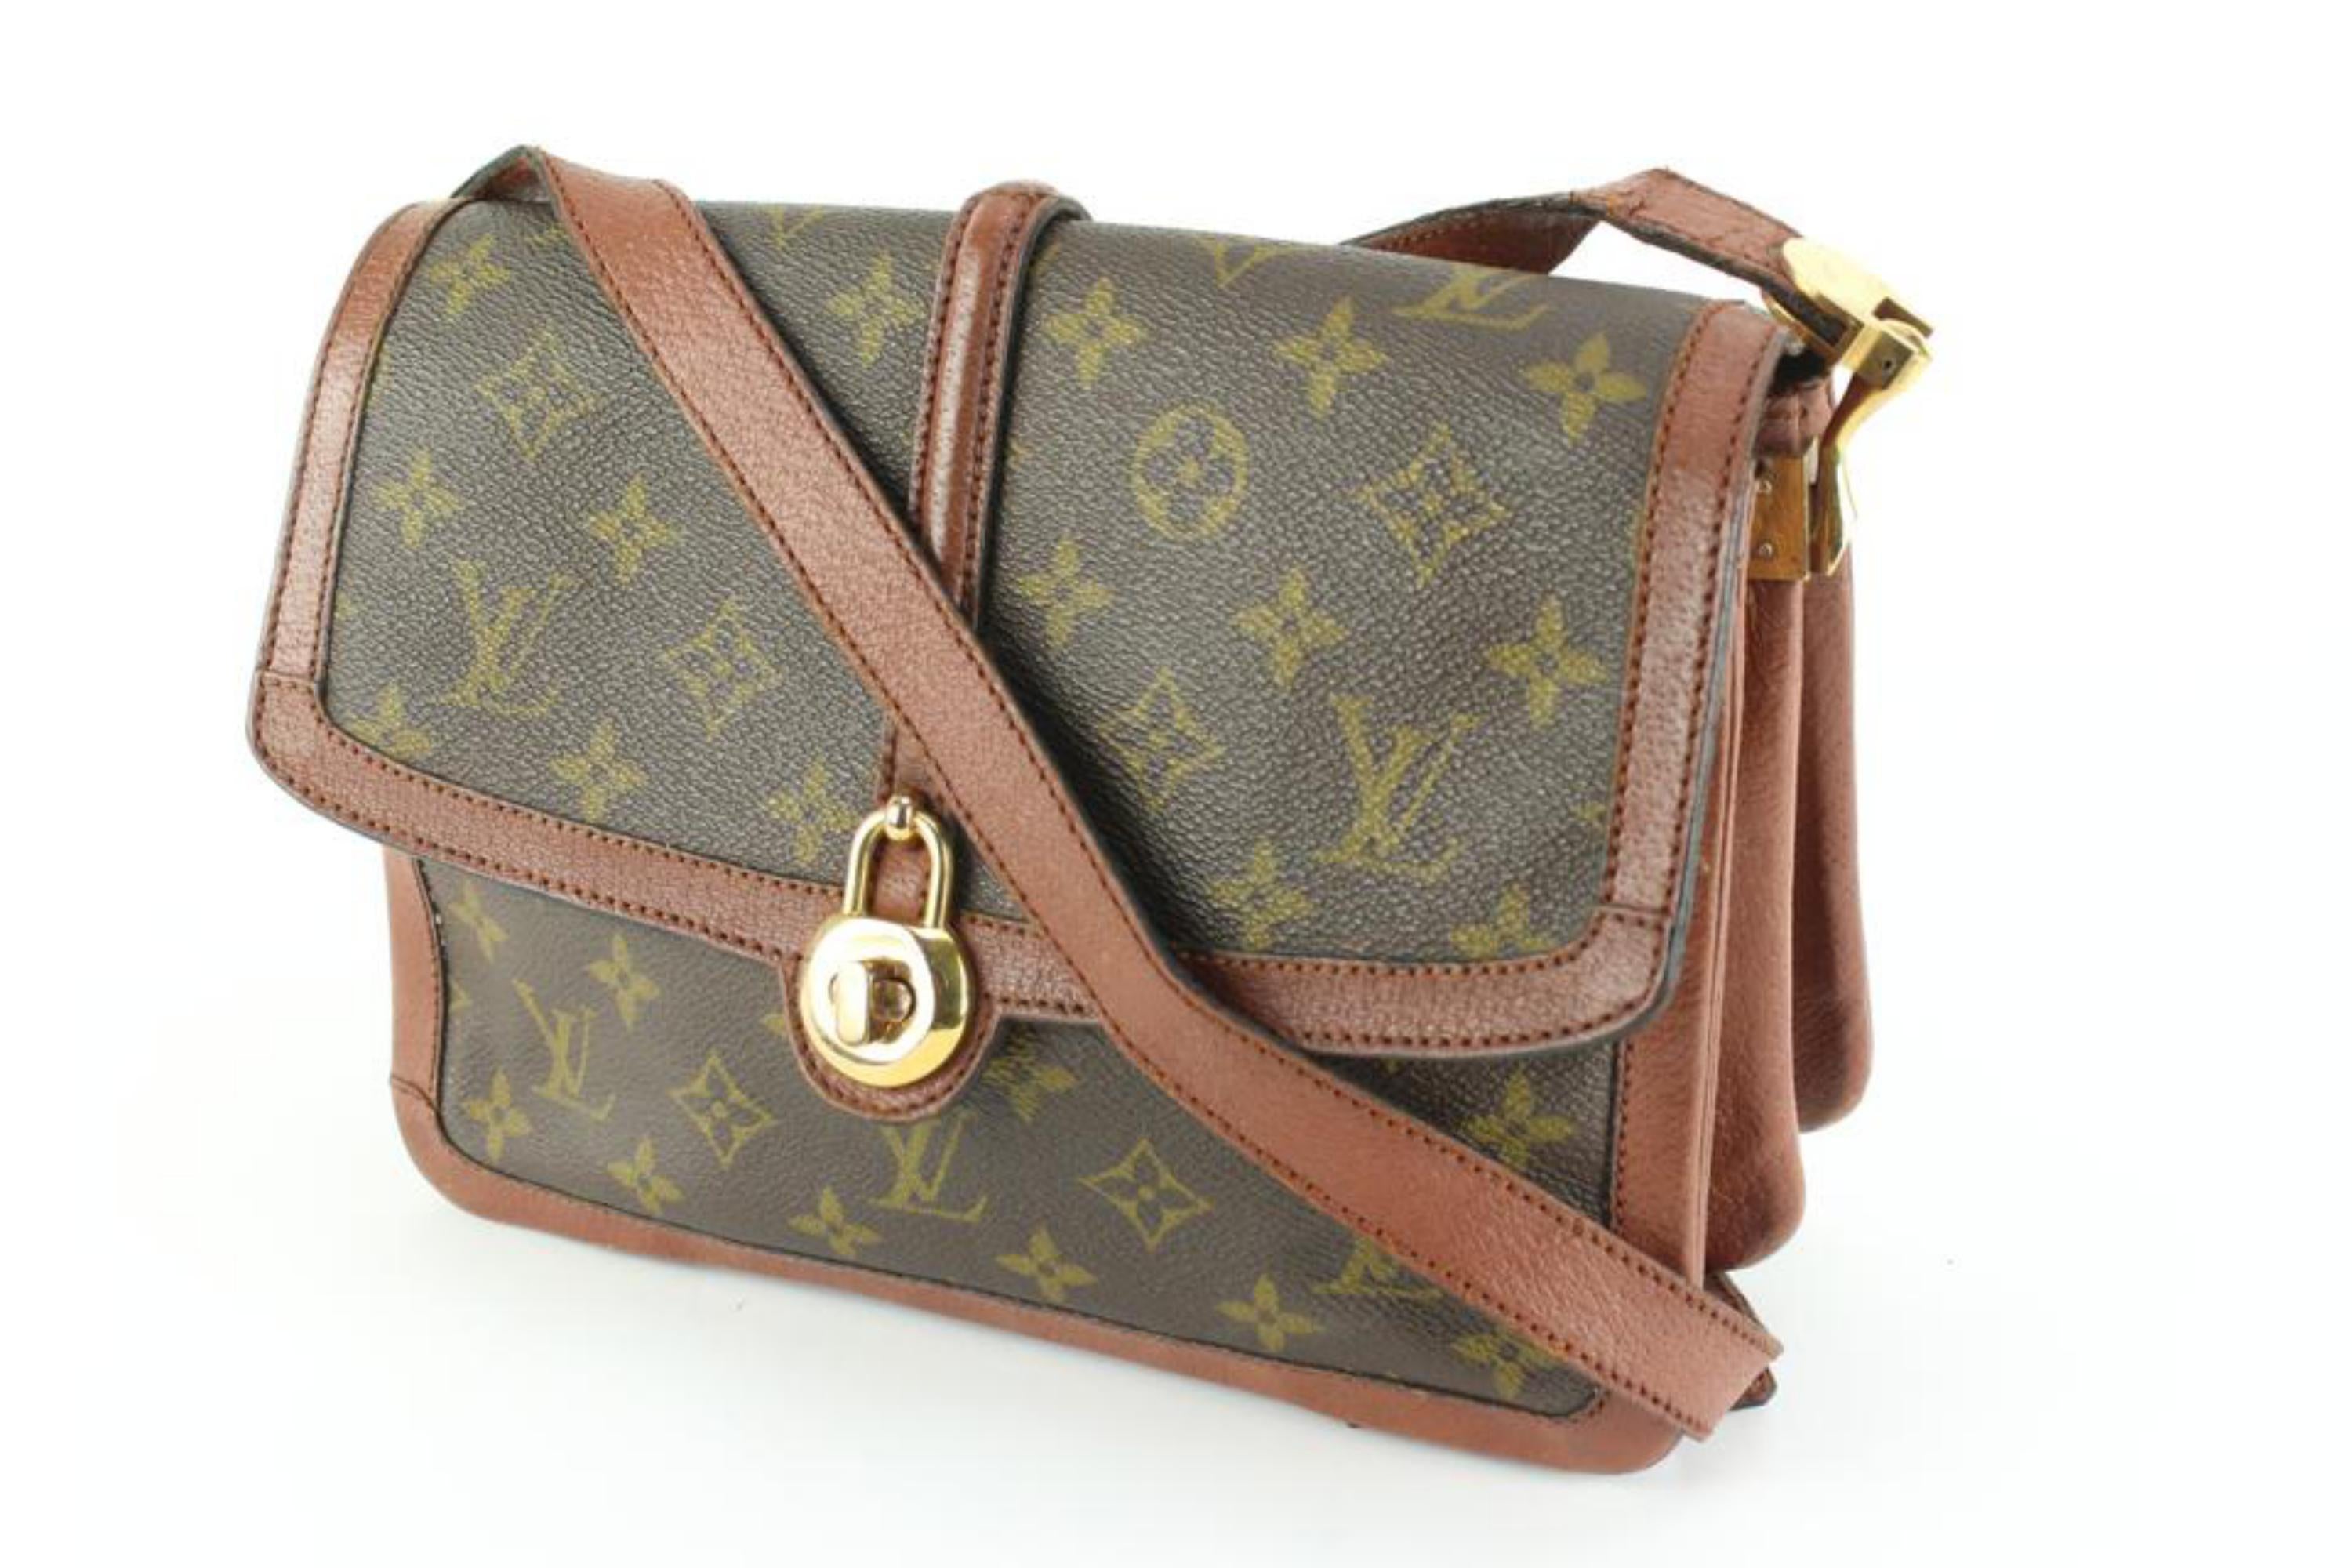 Louis Vuitton - Sac Vendome - Crossbody bag - Catawiki